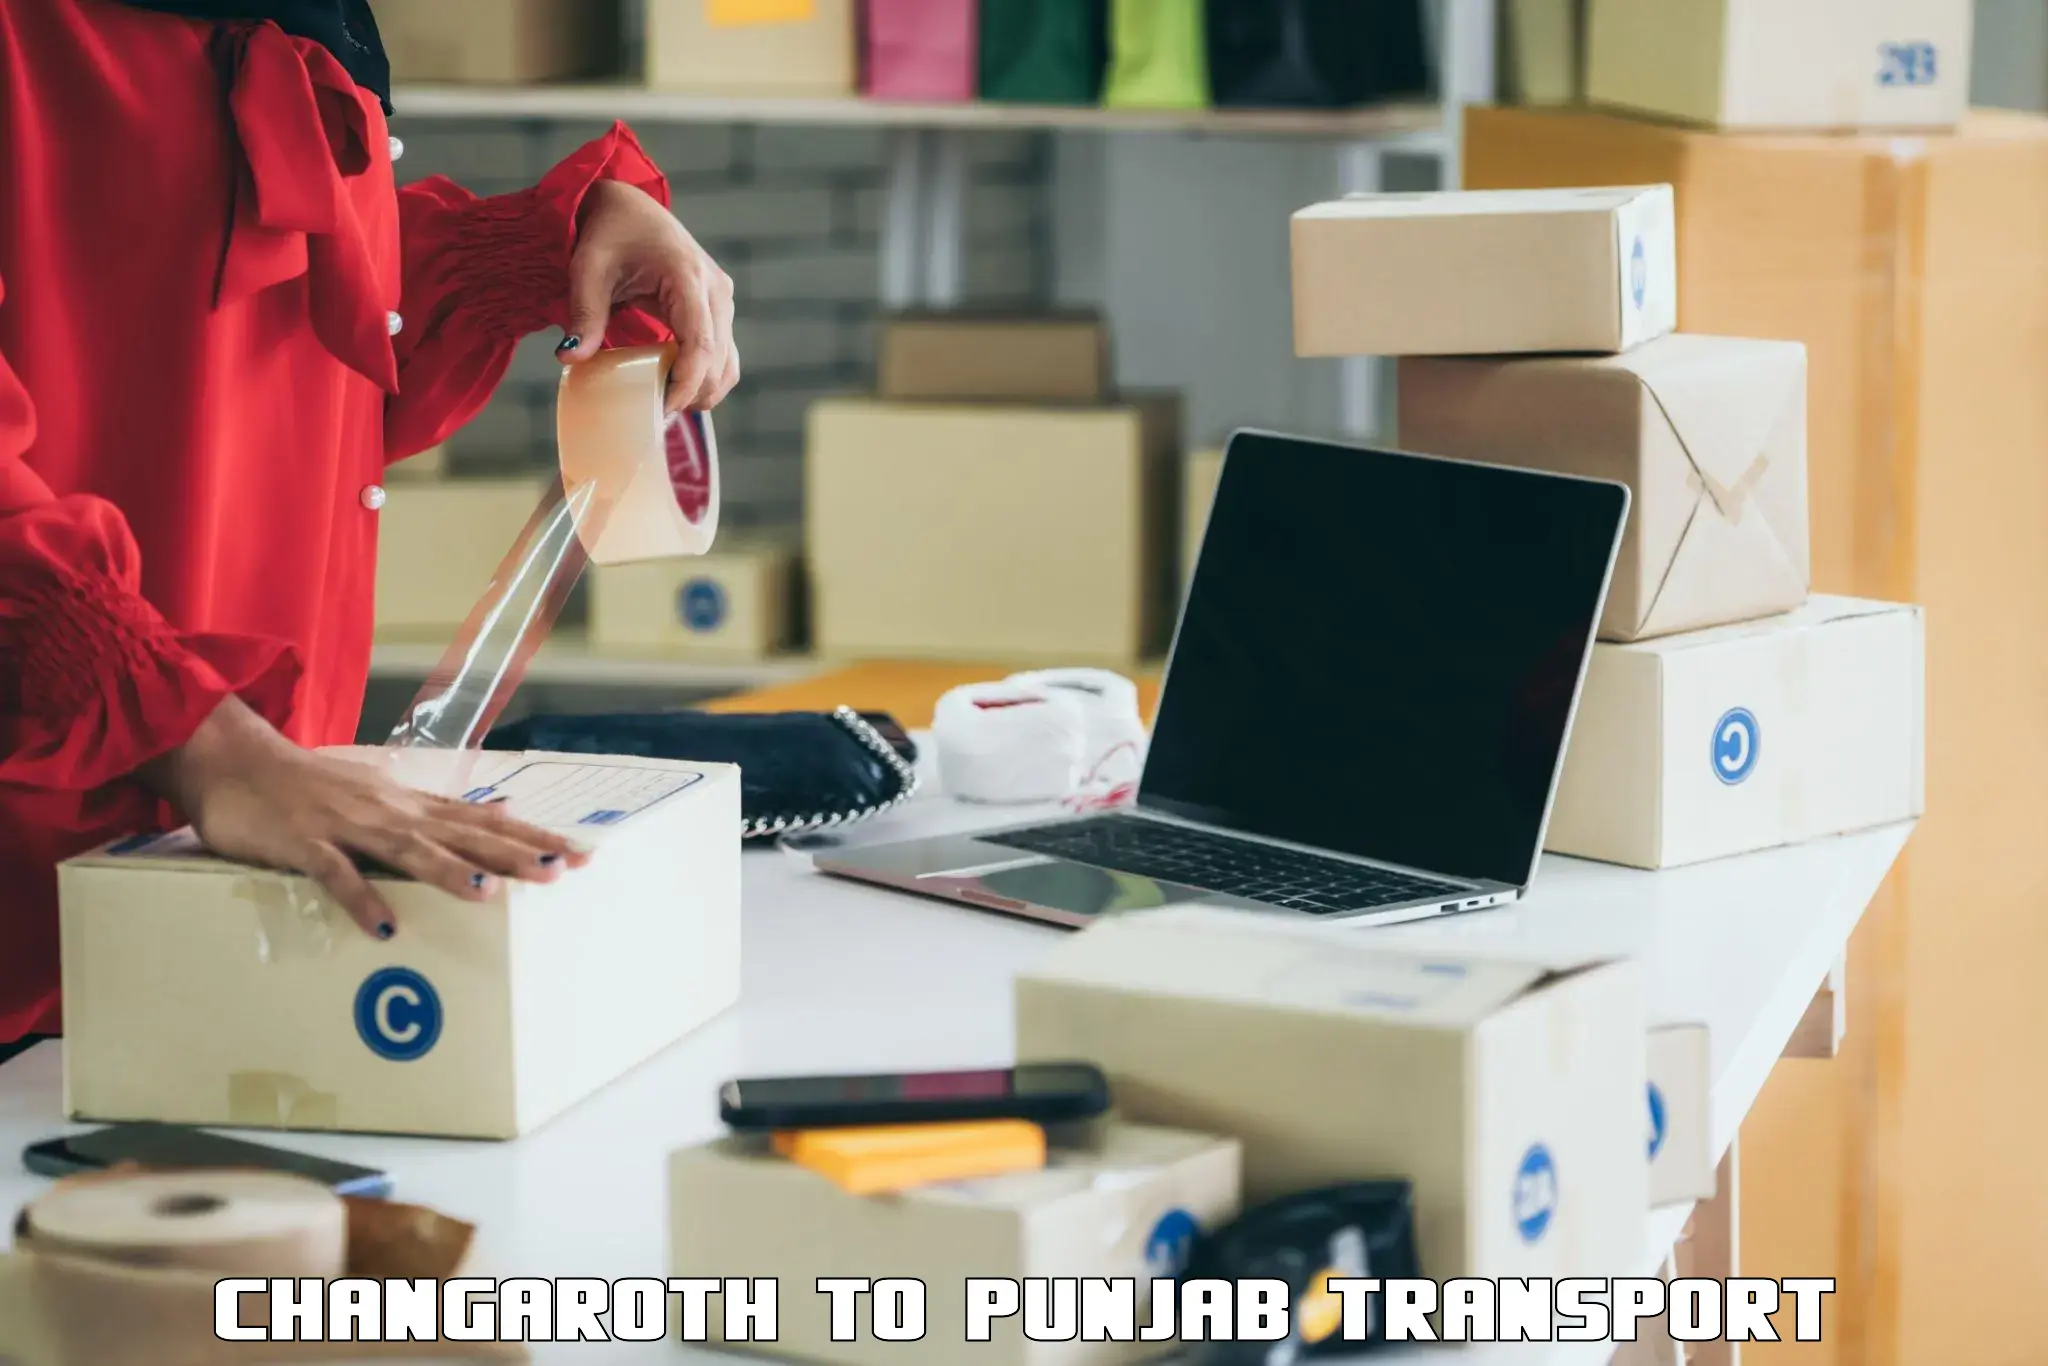 Furniture transport service Changaroth to Khanna